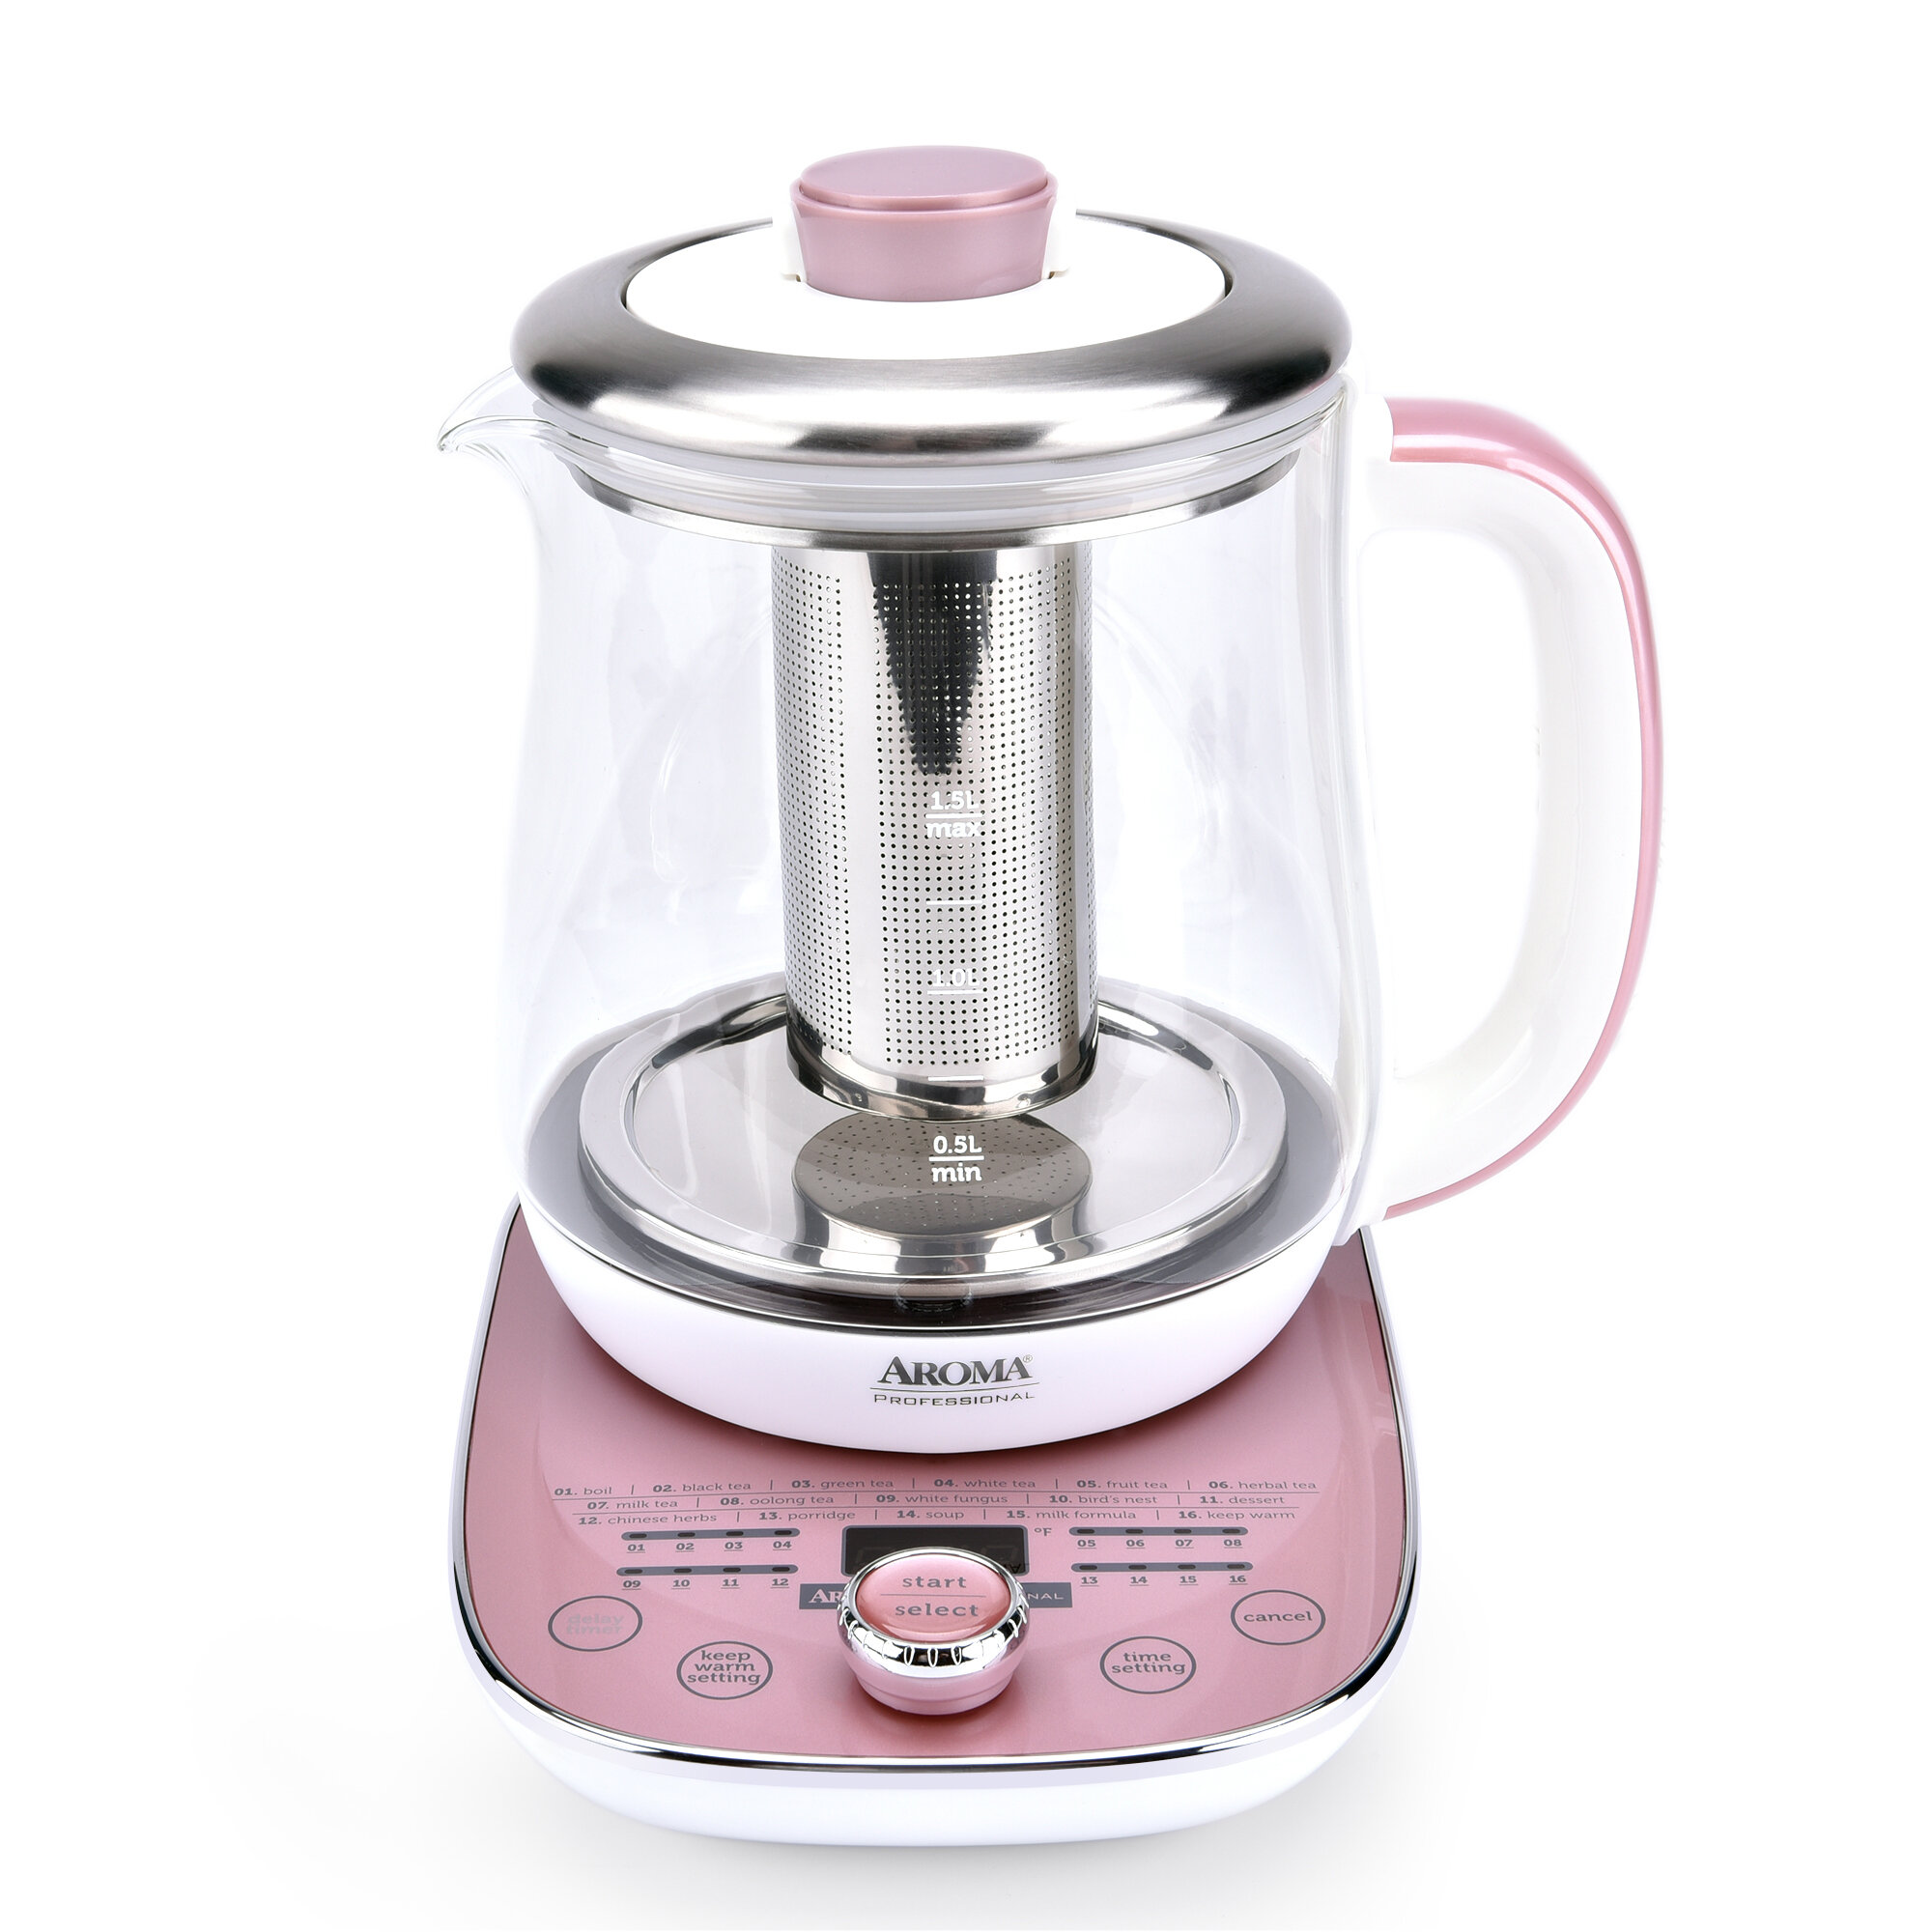 AROMAÂ® Professional 1.5L / 6-Cup Glass Digital Electric Tea Maker